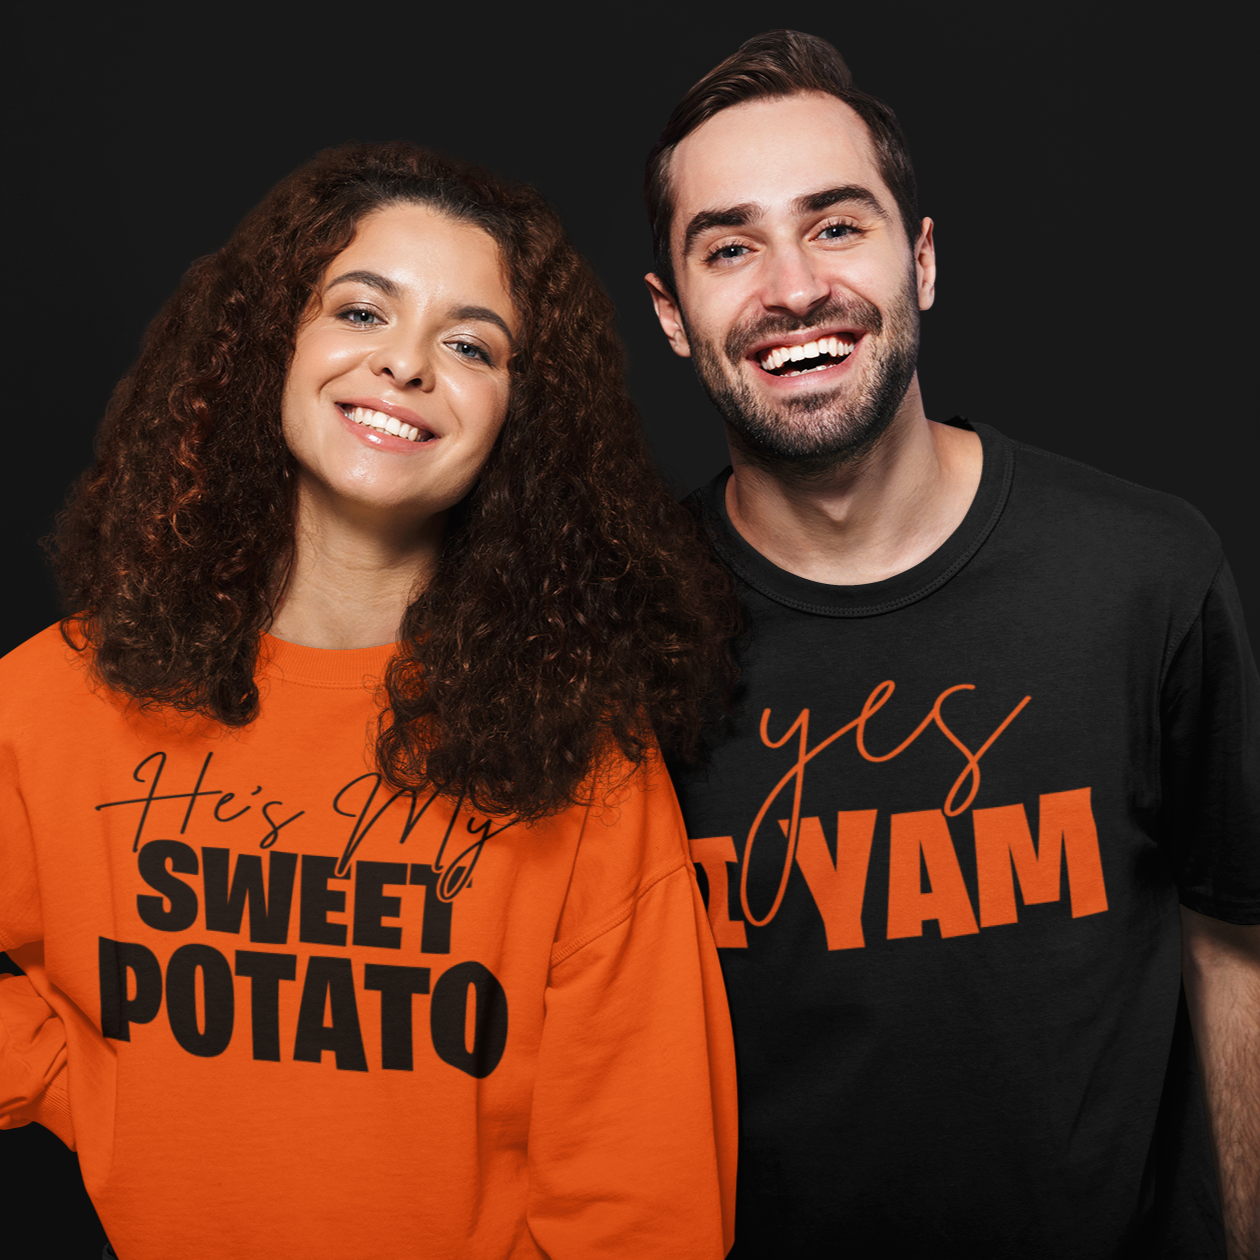 He's my sweet potato I yam shirts, thanksgiving shirts for couples, couple thanksgiving shirt, thanksgiving couple shirts - Wilson Design Group